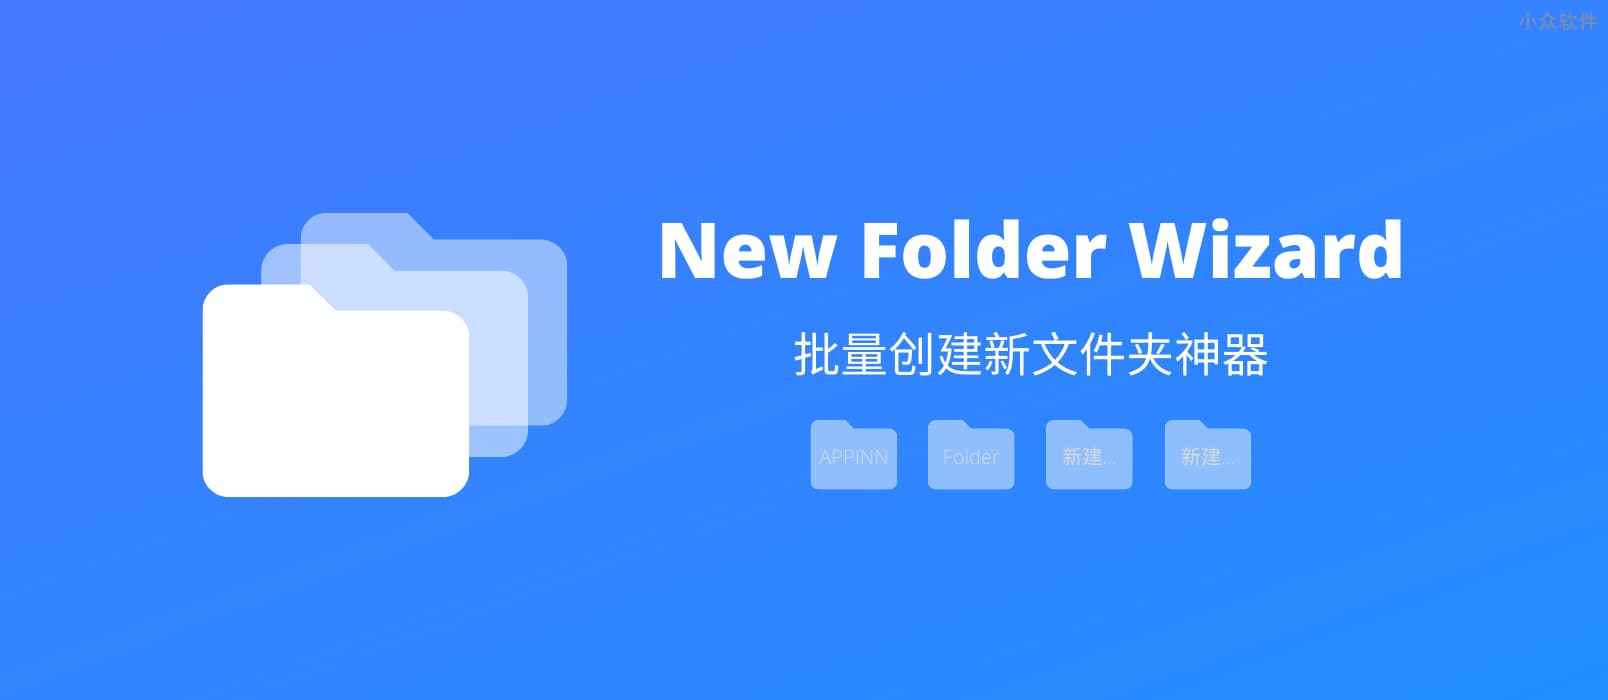 New Folder Wizard – 批量创建新文件夹神器[Windows]